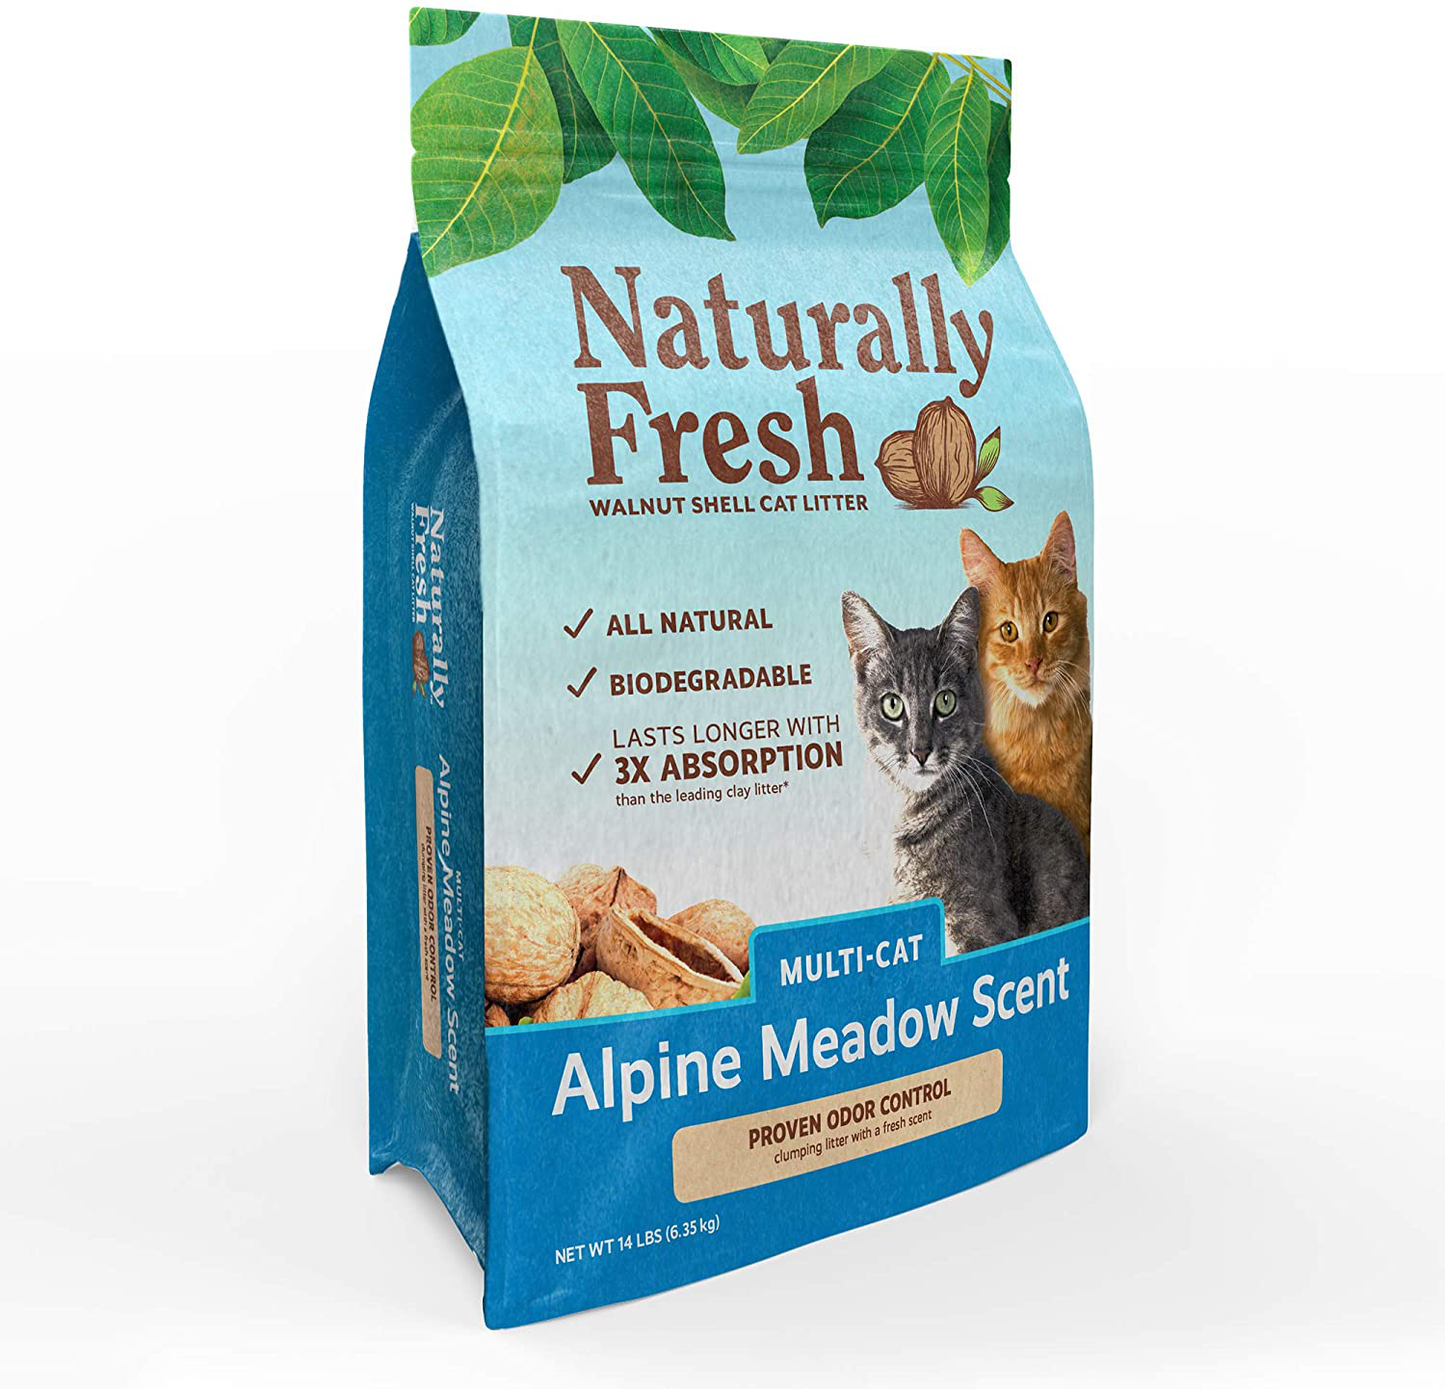 Naturally Fresh Cat Litter - Walnut Animals & Pet Supplies > Pet Supplies > Cat Supplies > Cat Litter Naturally Fresh   